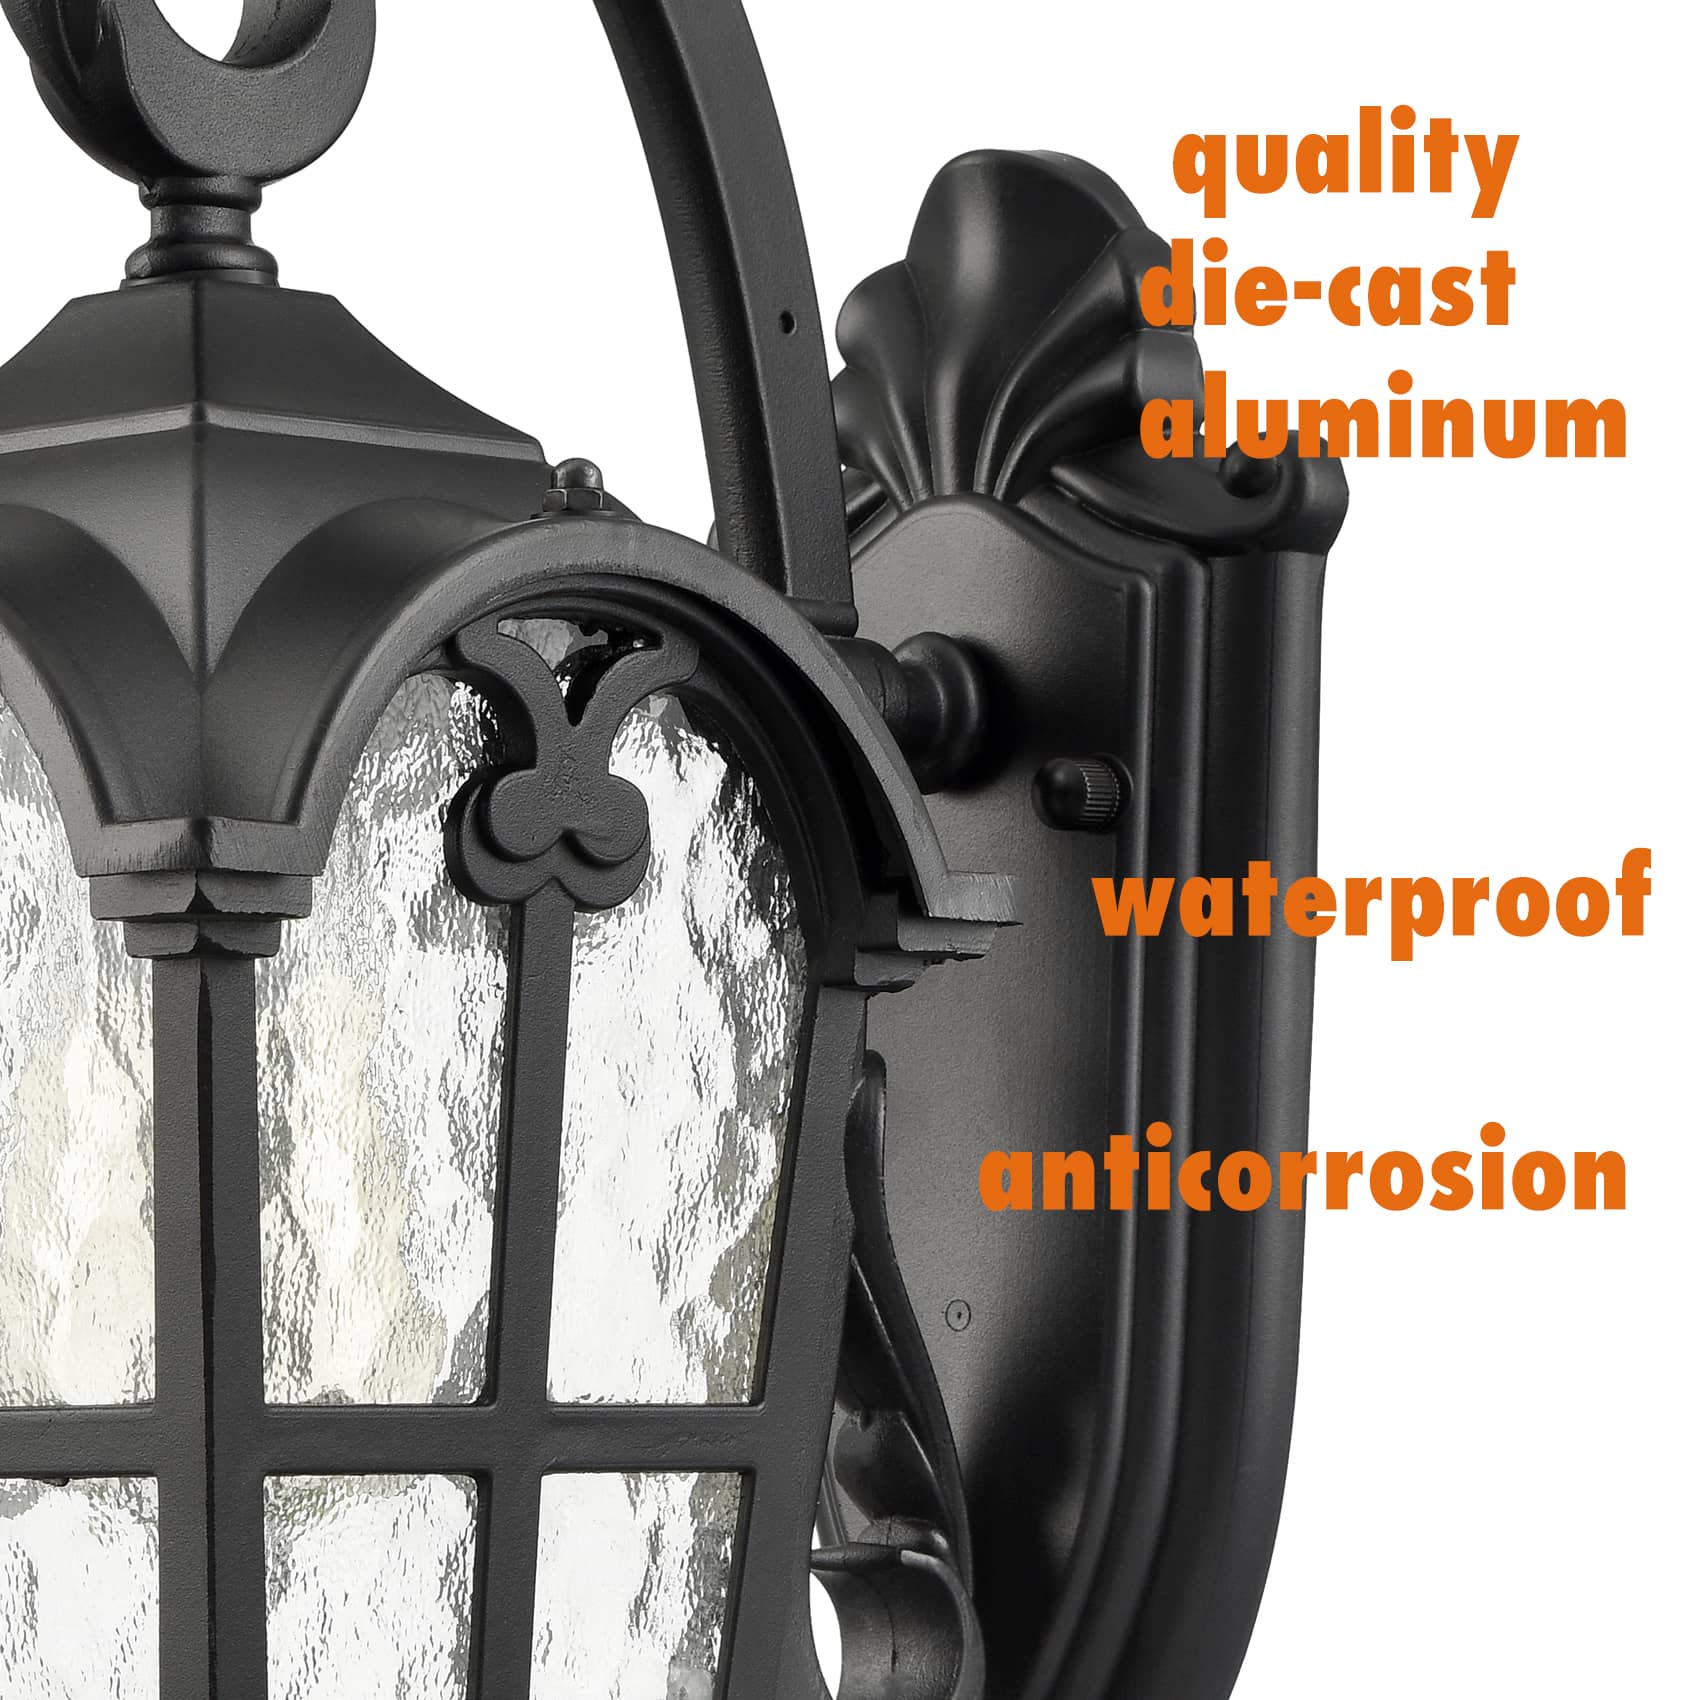 Outdoor Wall Light Fixture Black Waterproof Exterior Wall Lantern